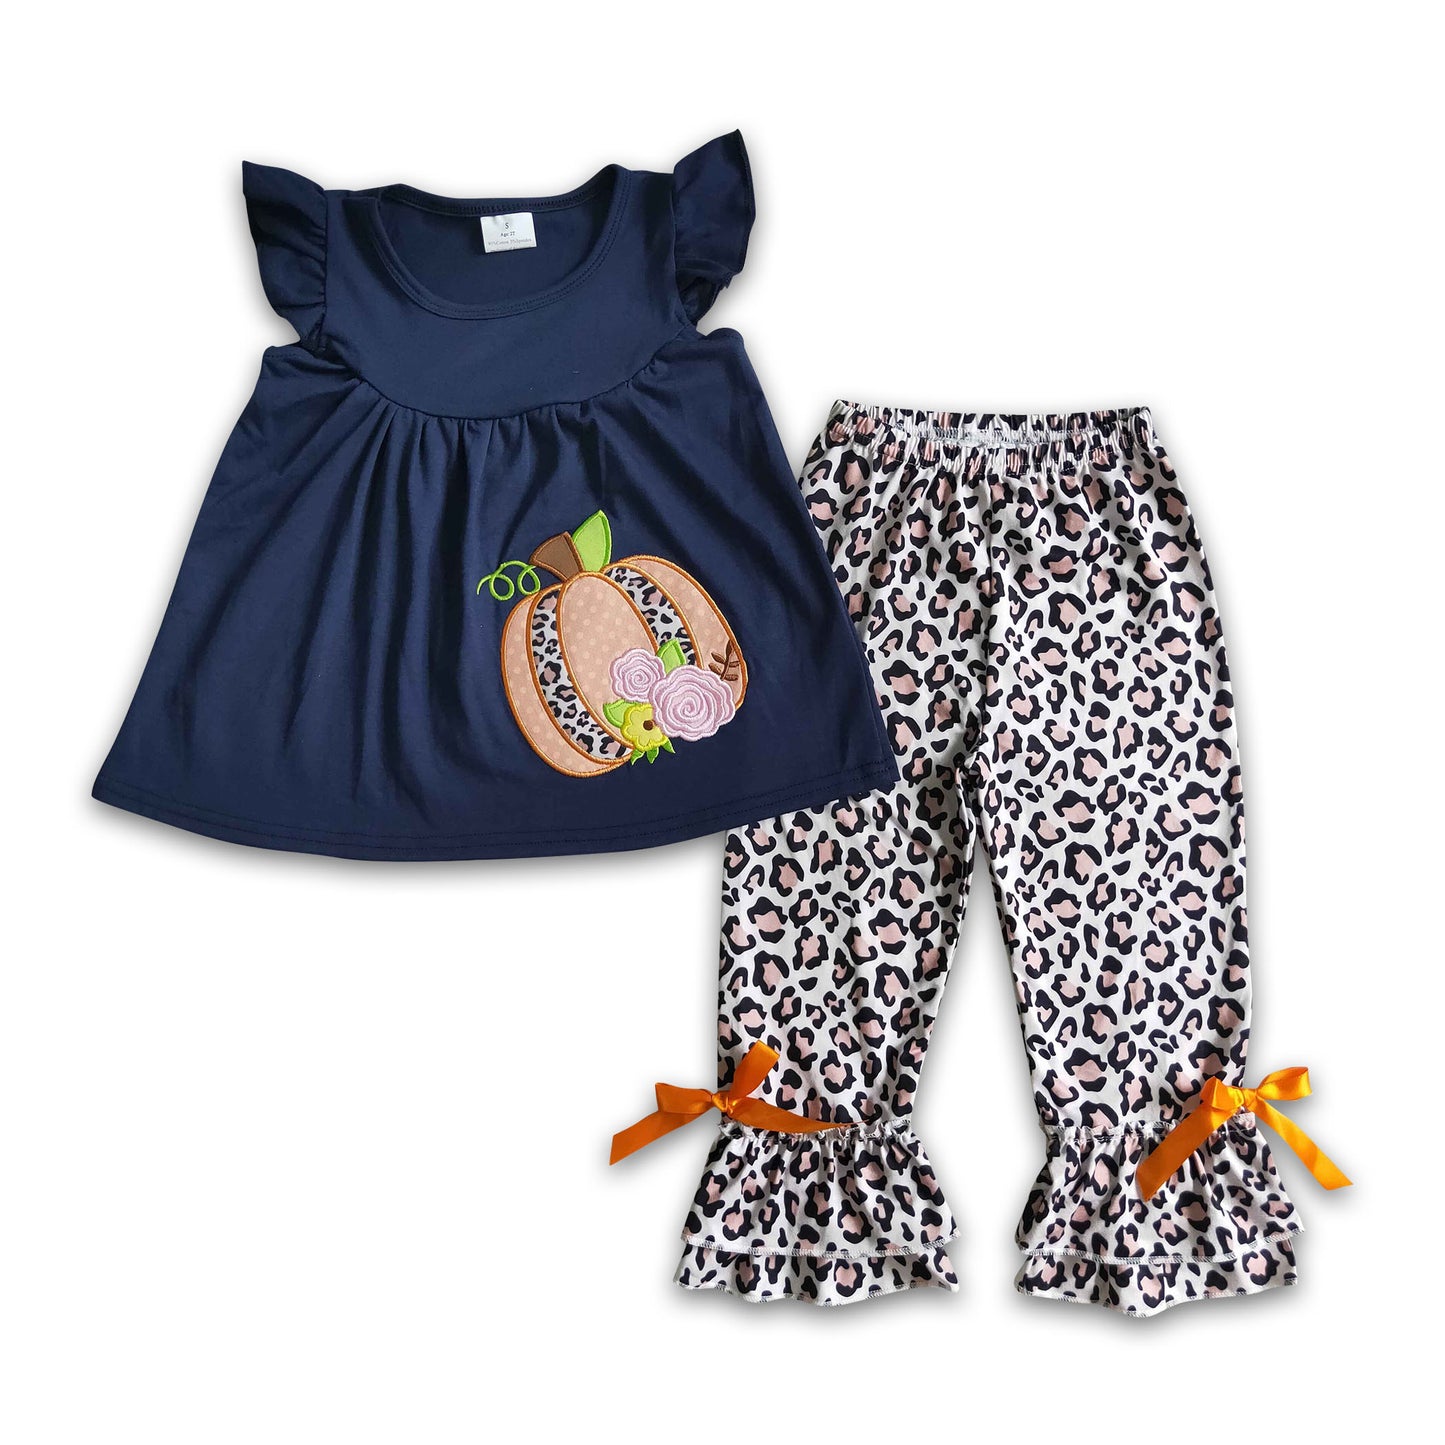 Navy cotton pumpkin embroidery leopard ruffle set girls fall clothes